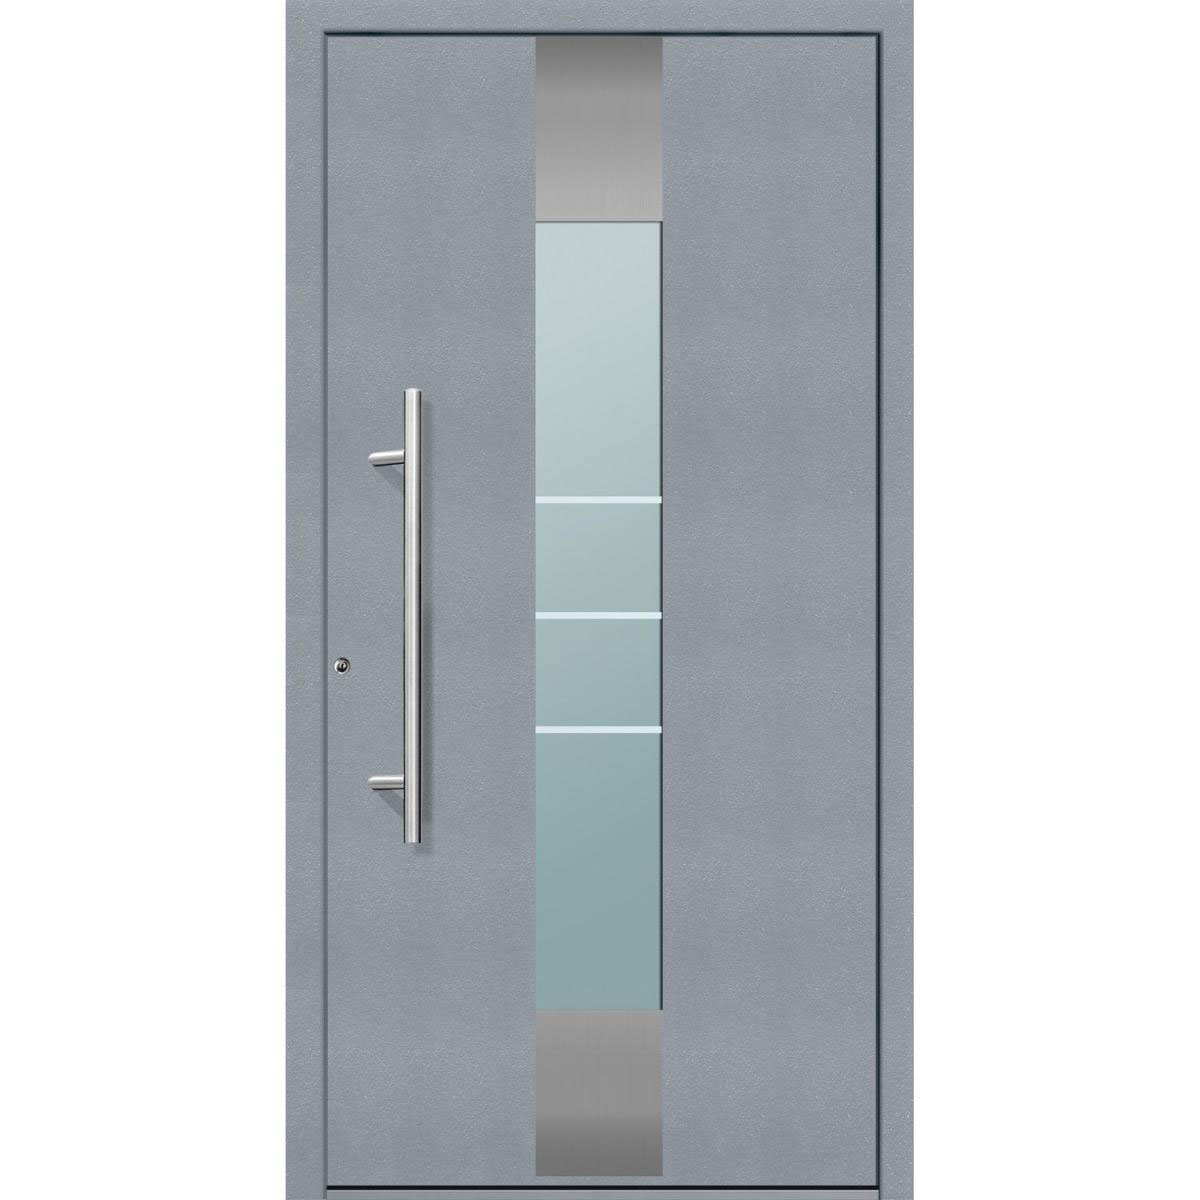 Aluminium-Sicherheitshaustür „Rom Exklusiv“, 75 mm, grau, 100x210 cm, Anschlag links, inkl. Griffset